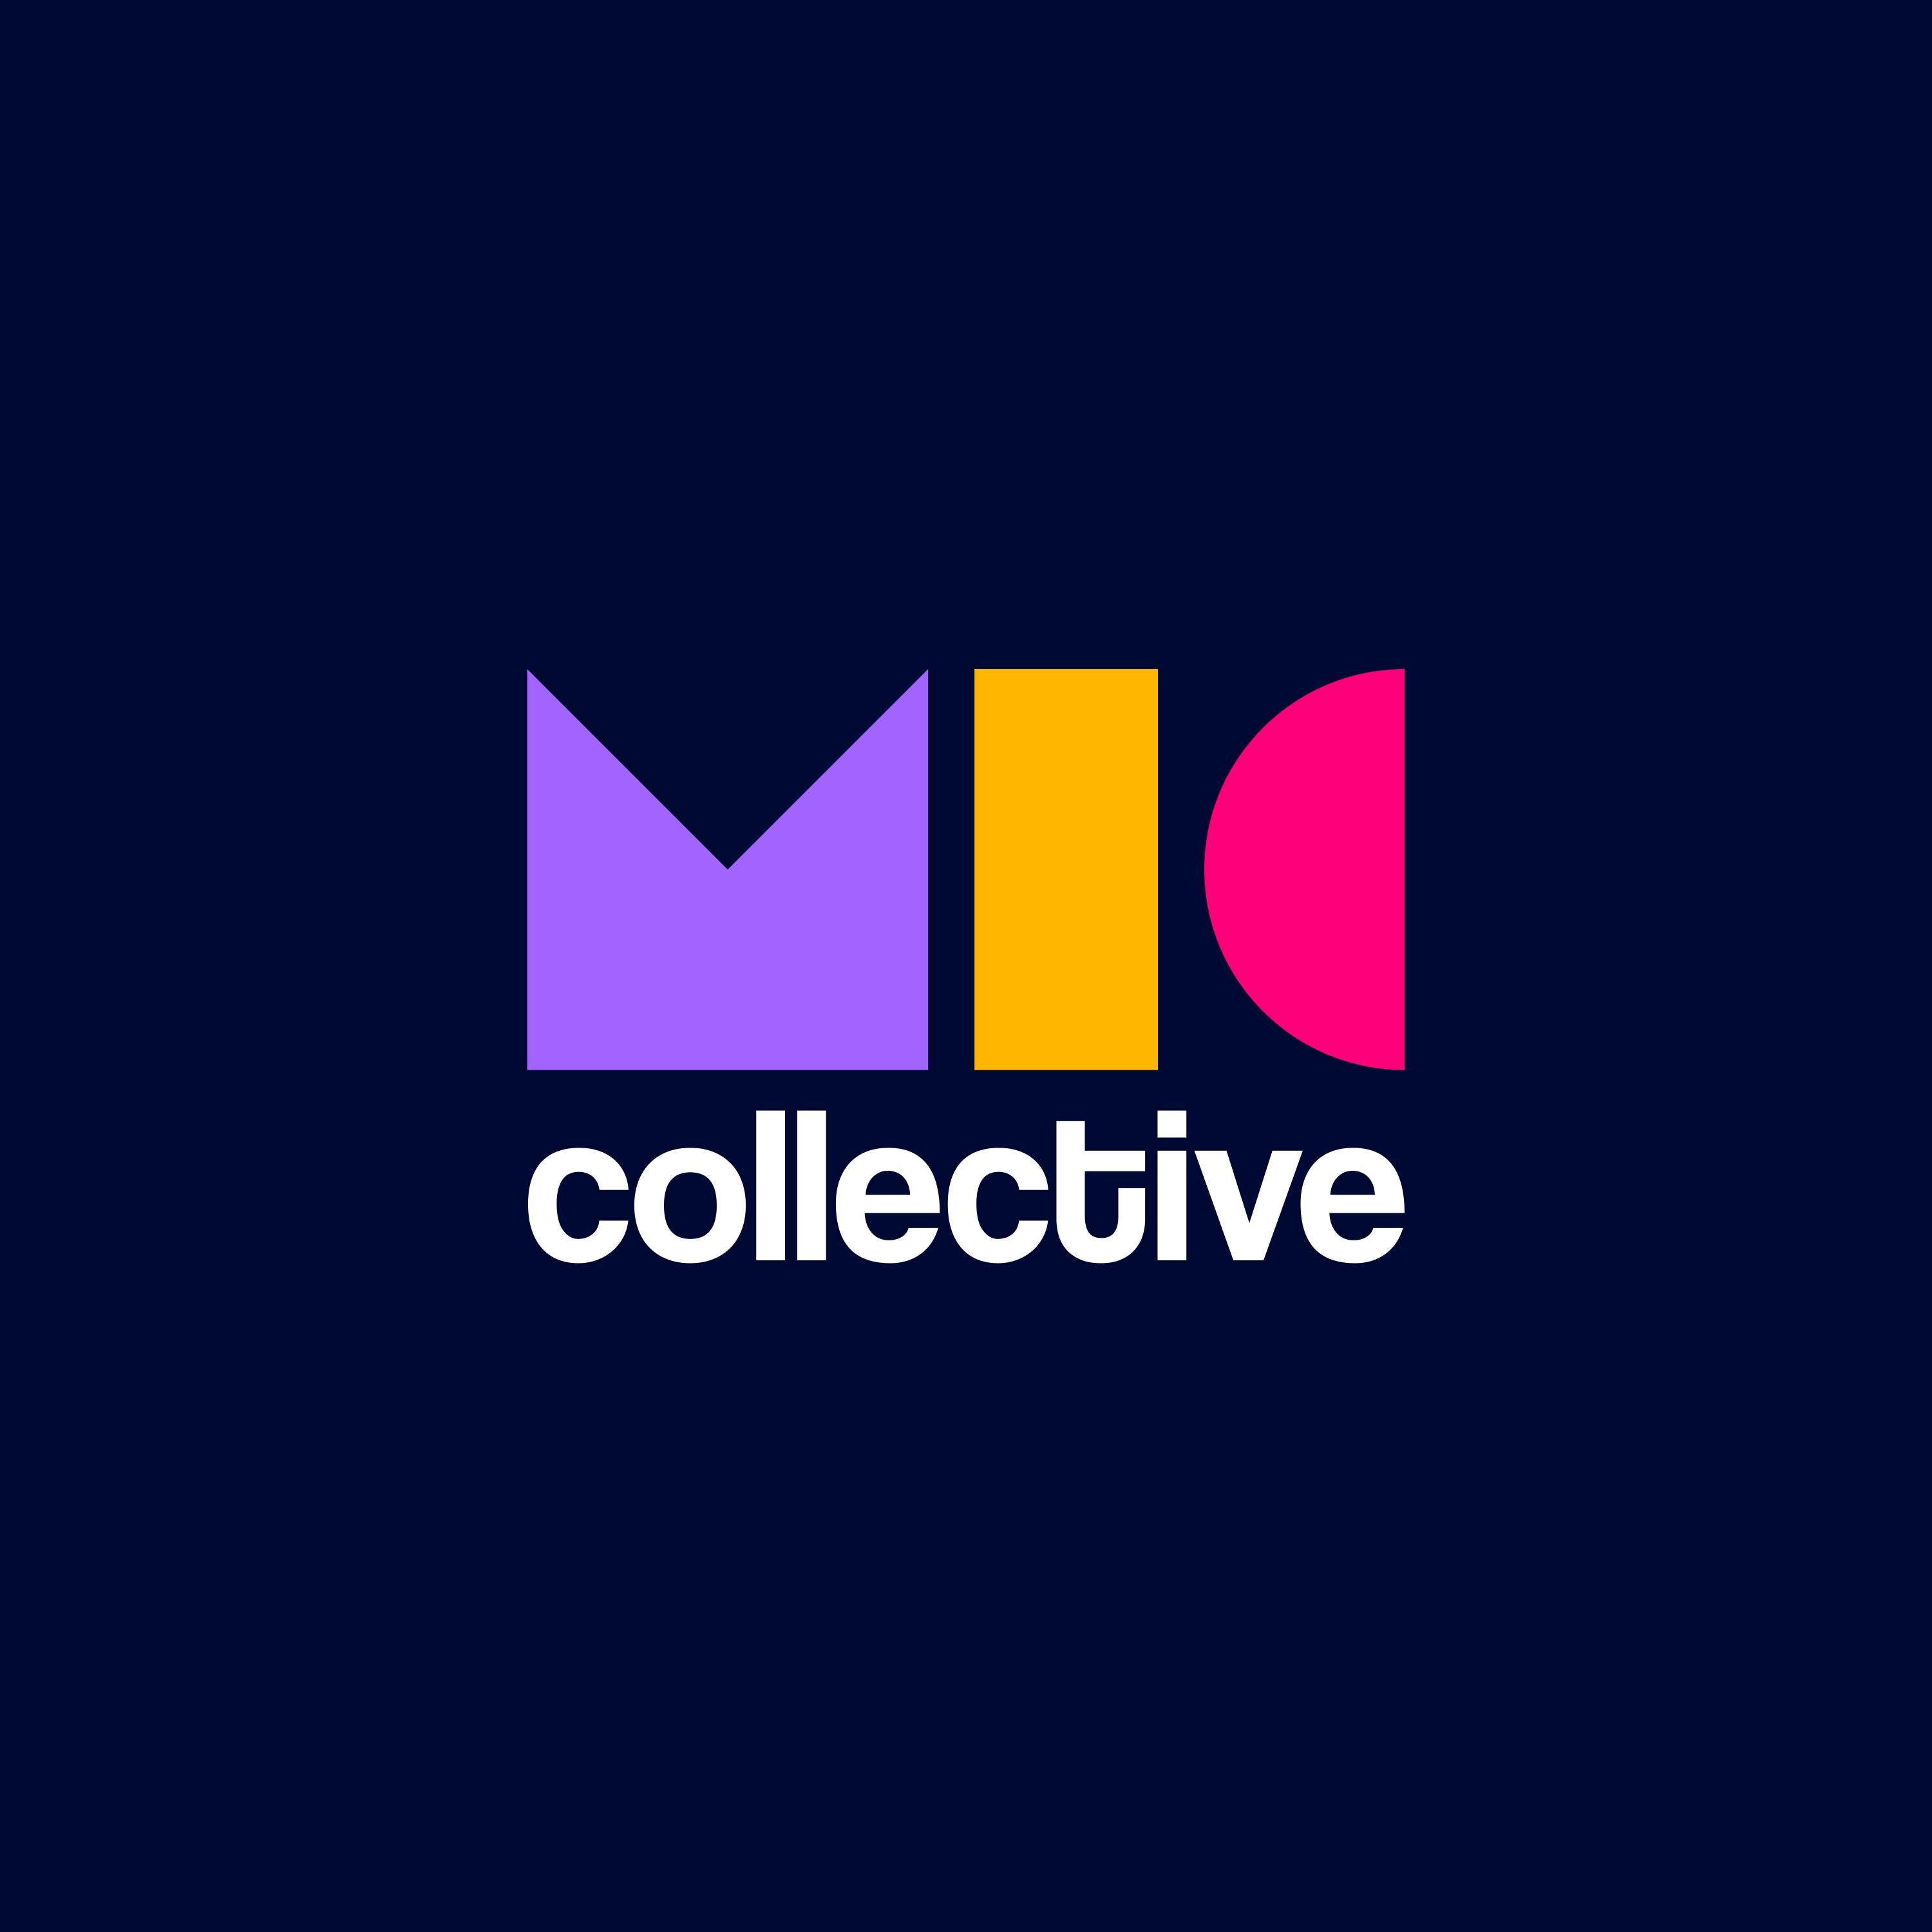 Meri Collective